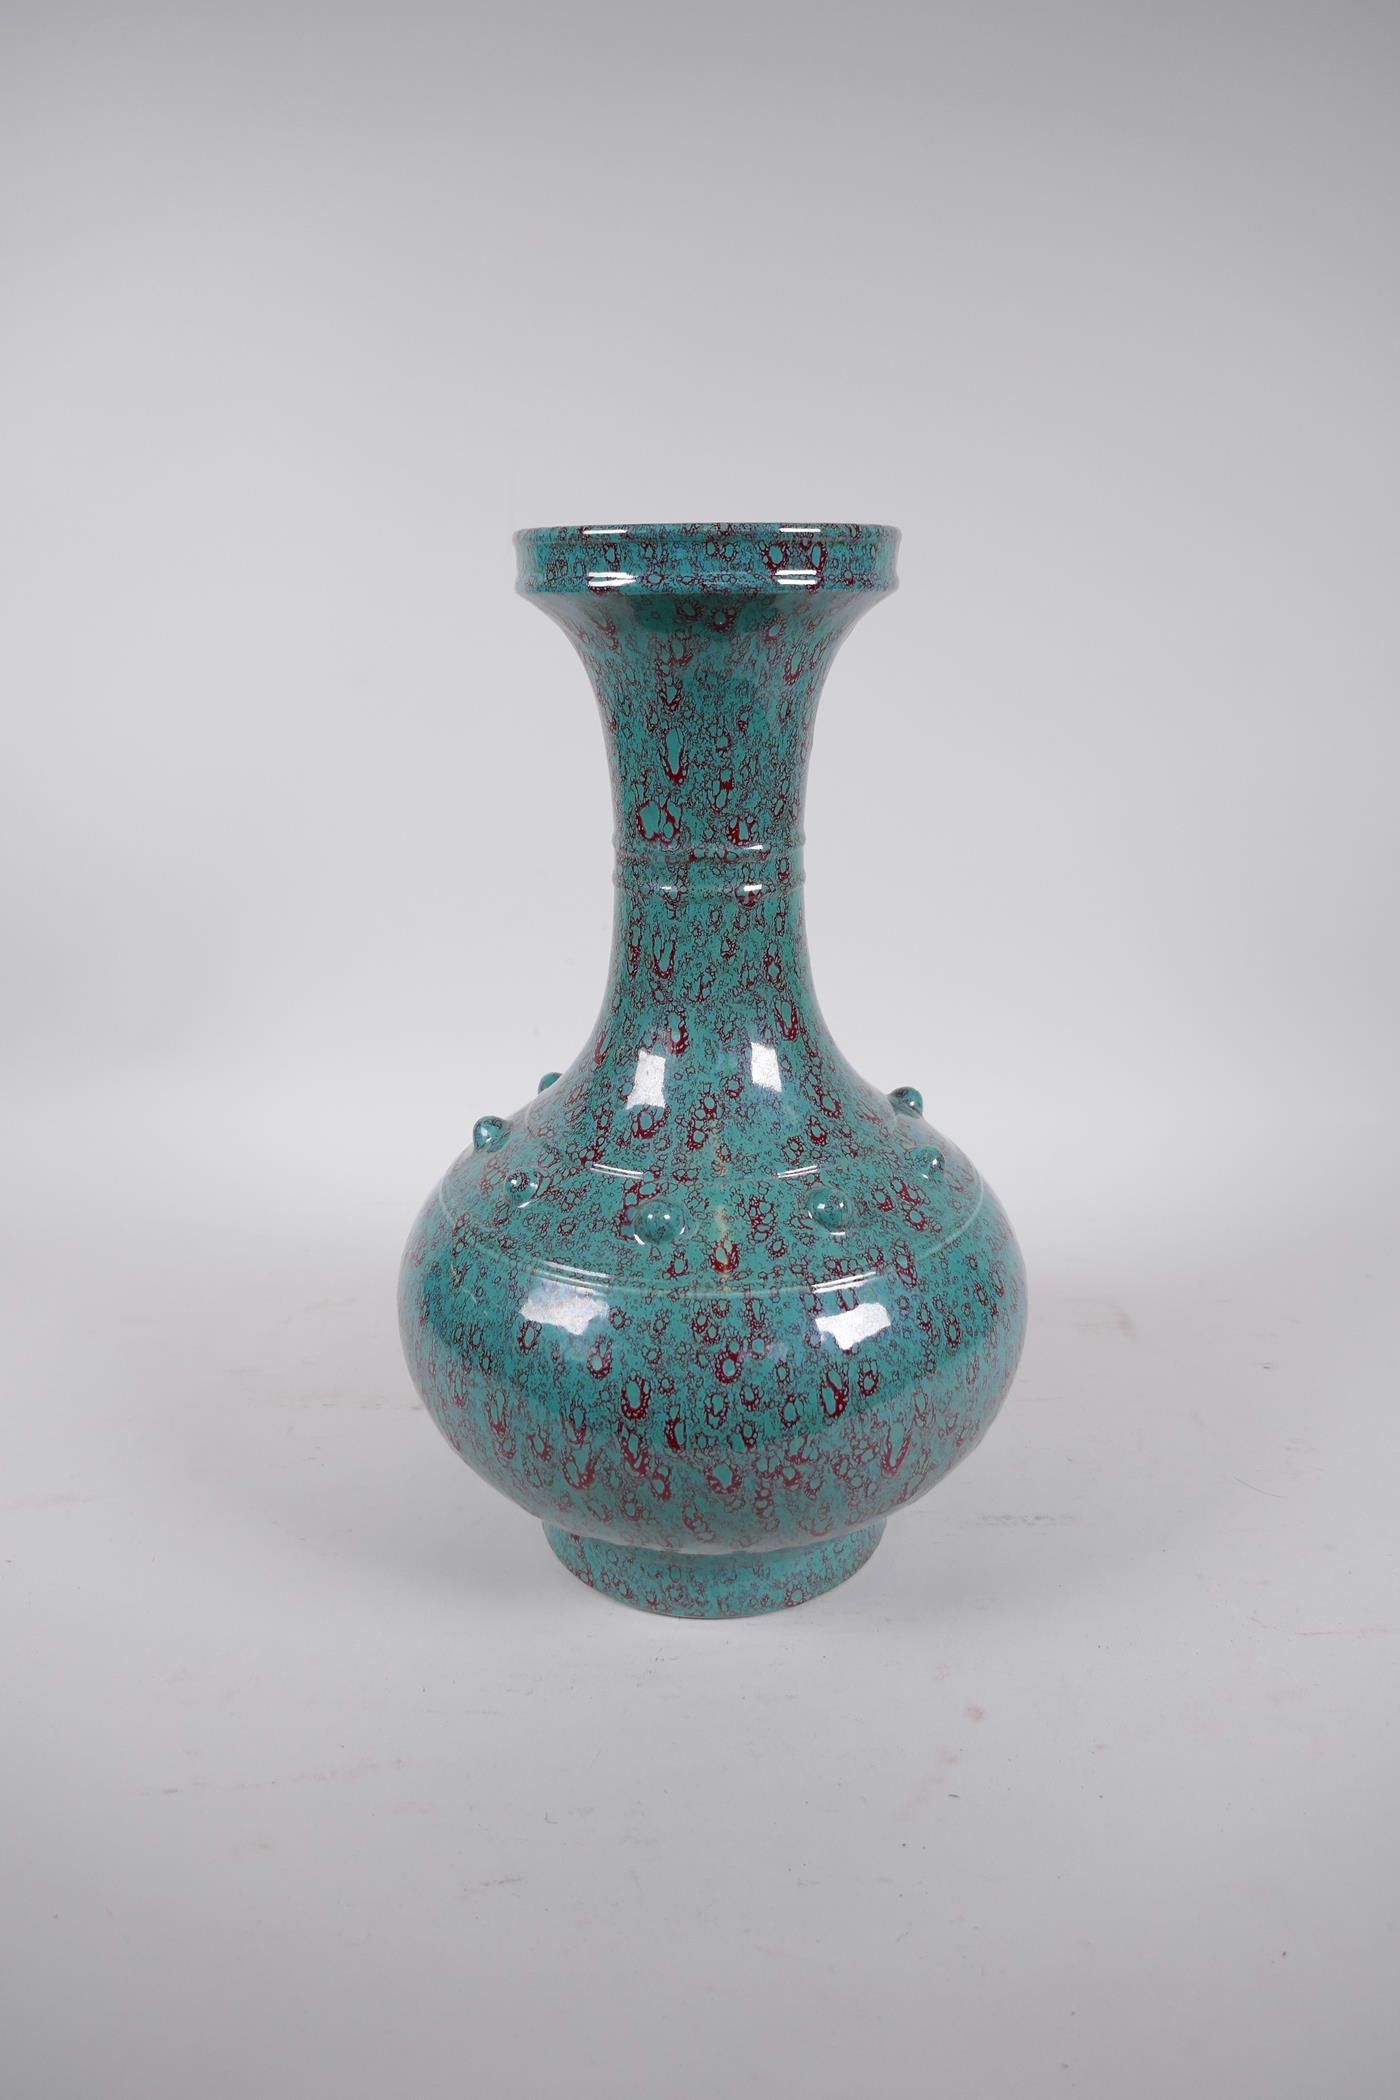 A Chinese robin's egg glaze porcelain vase, impressed seal mark to base, 12" high